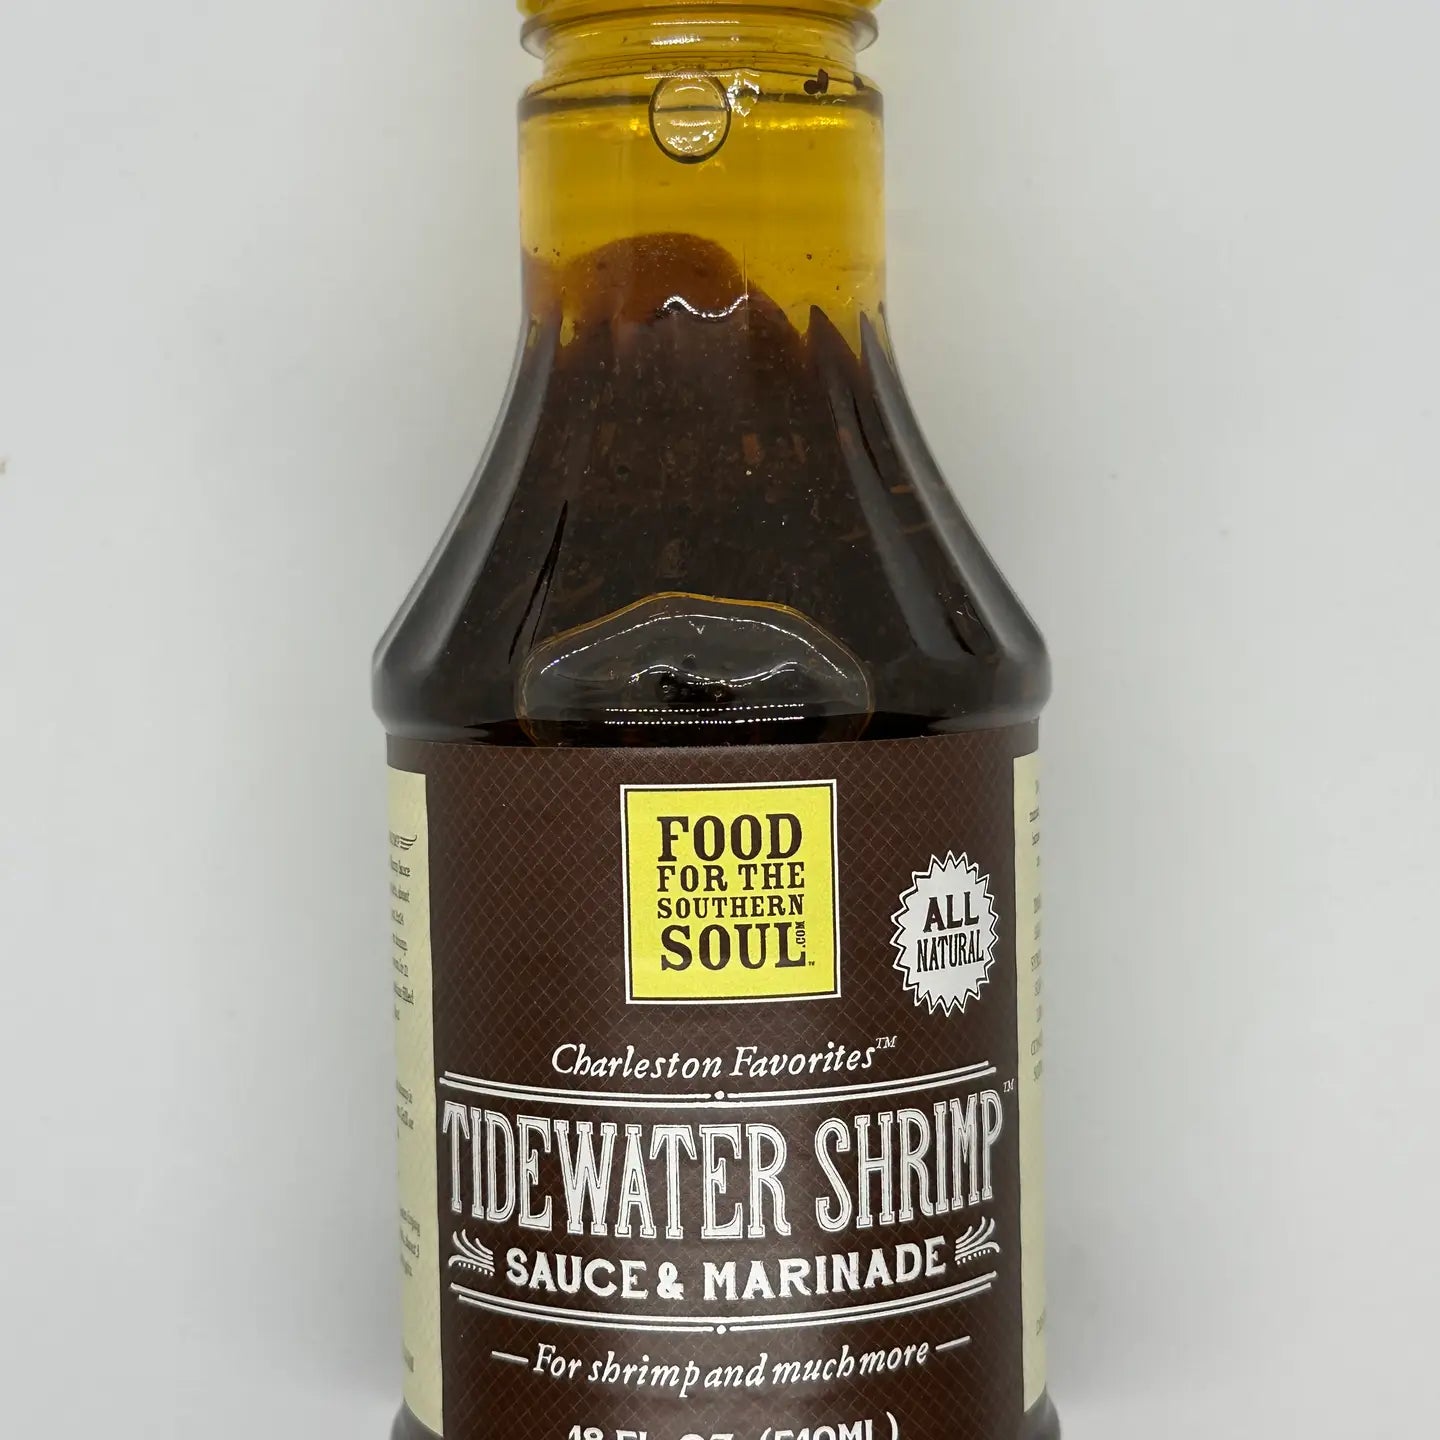 Tidewater Shrimp Sauce